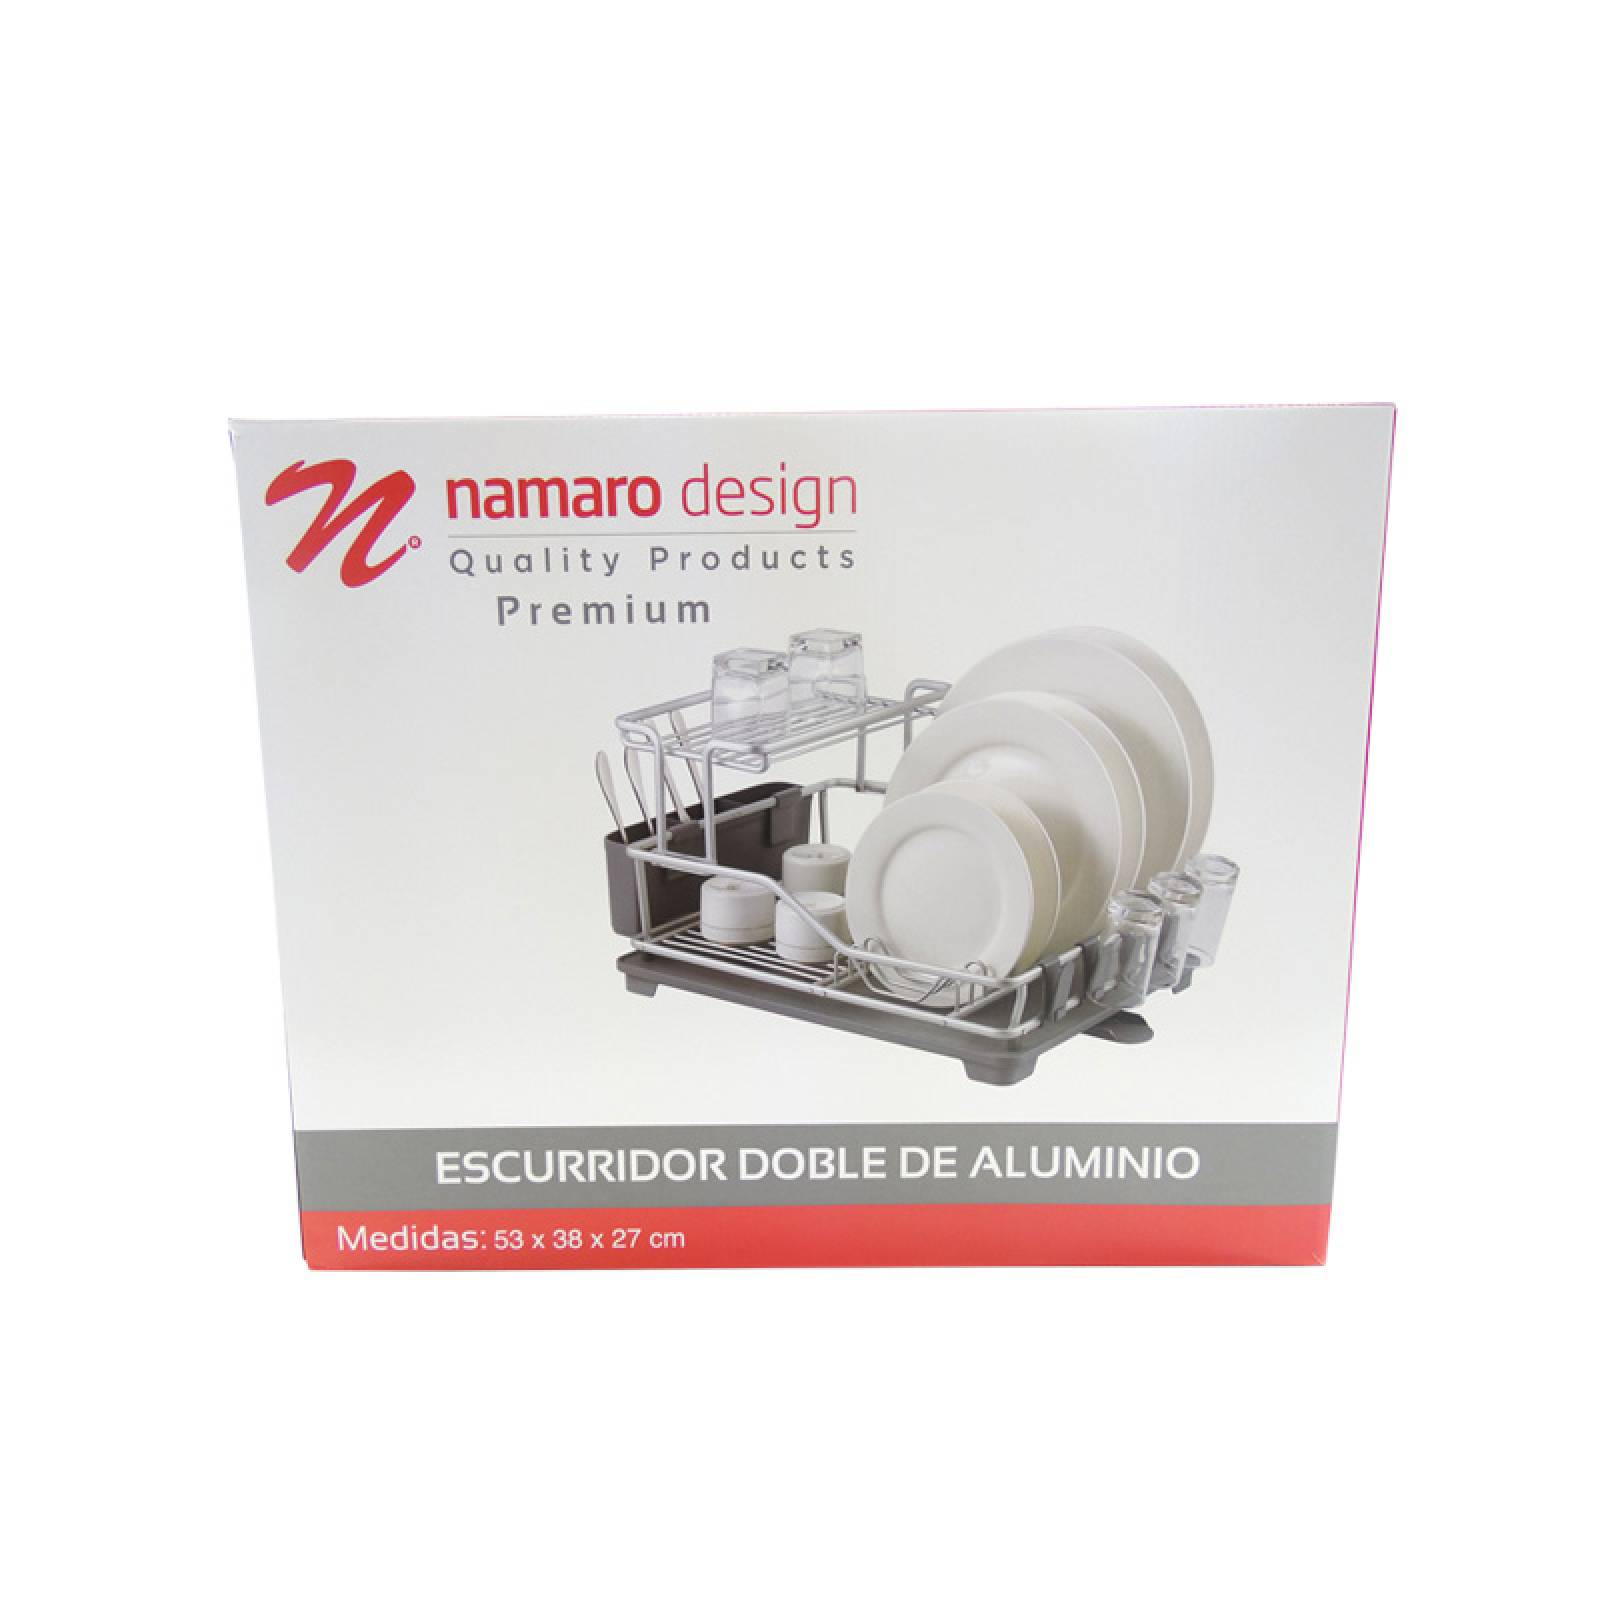 Escurridor Aluminio 2 Niveles Gris CO-440222 Namaro Design